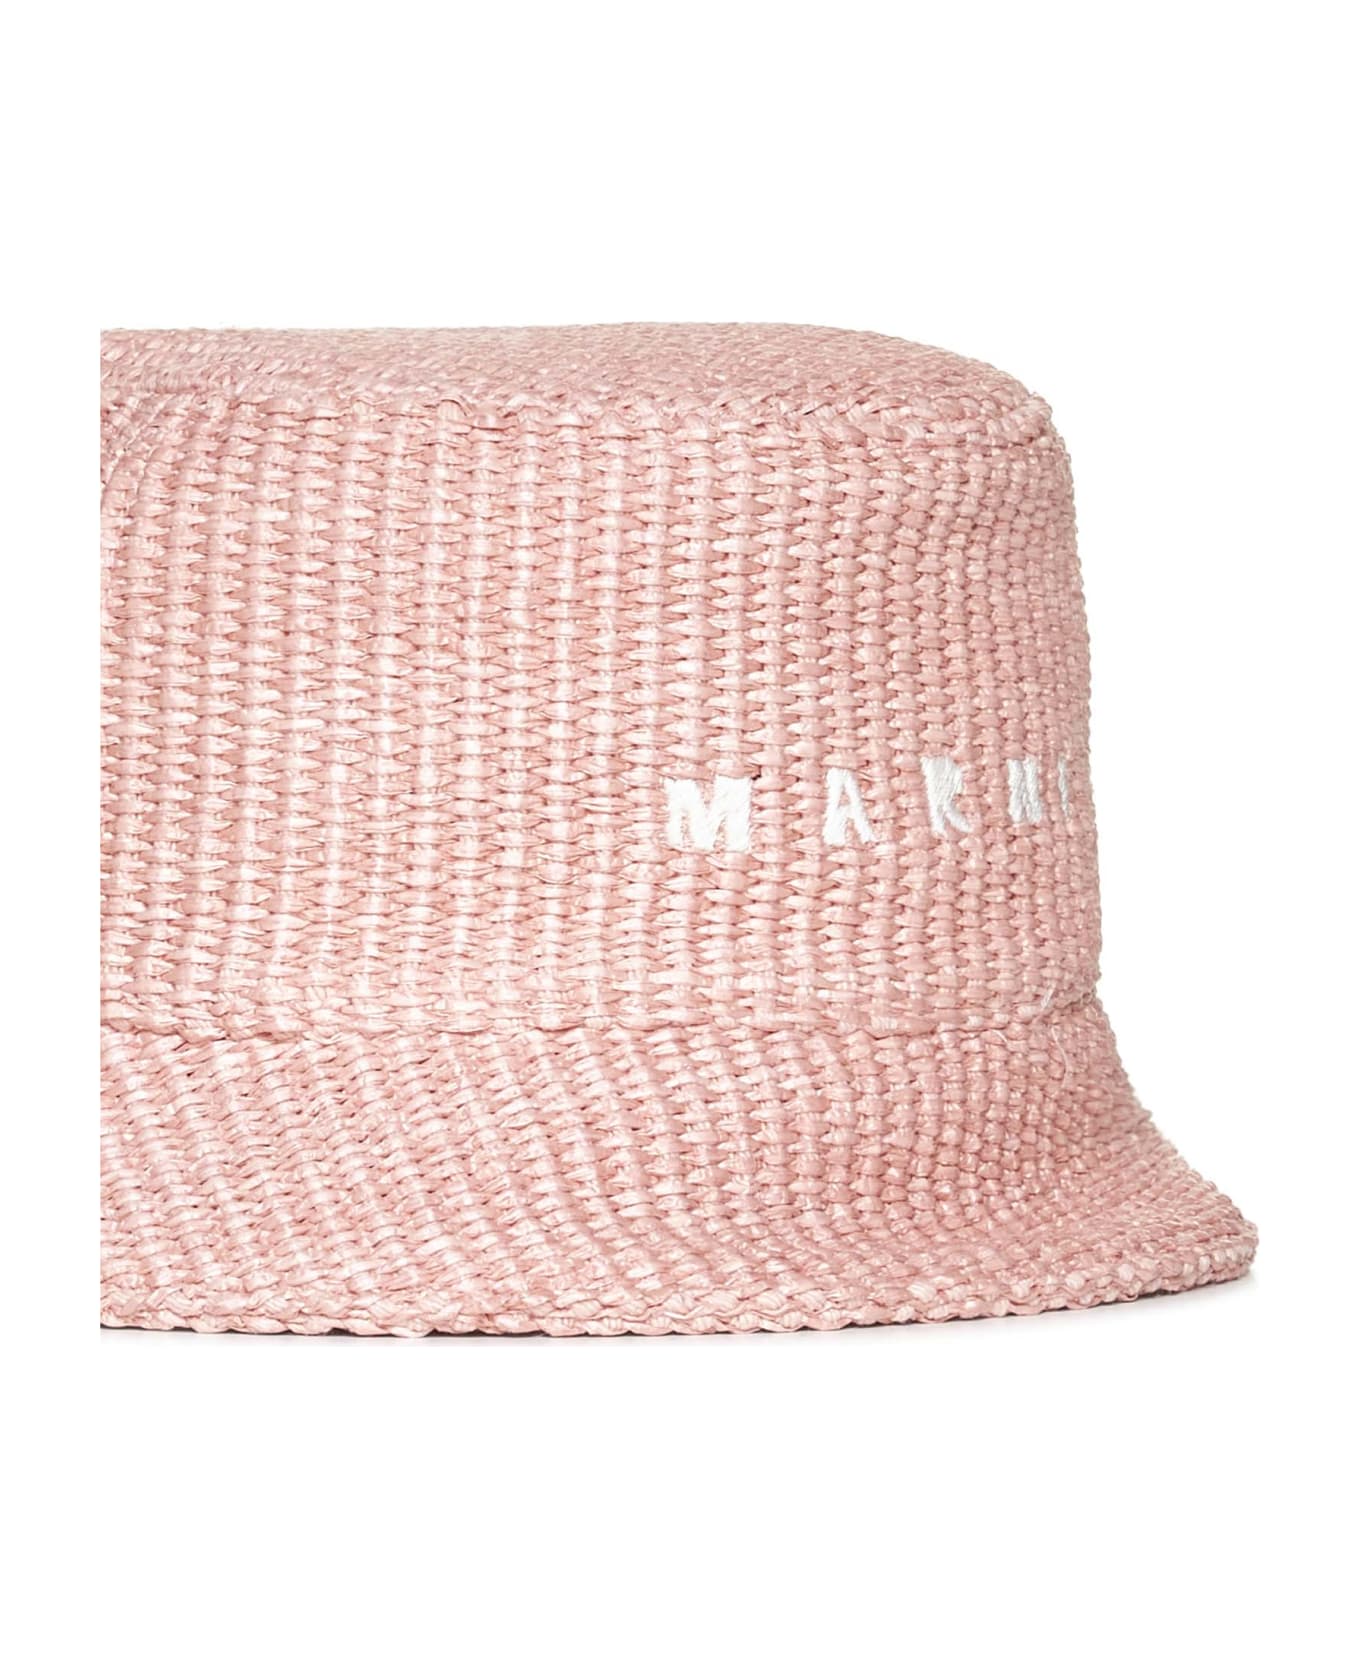 Marni Hat - Quarz 帽子